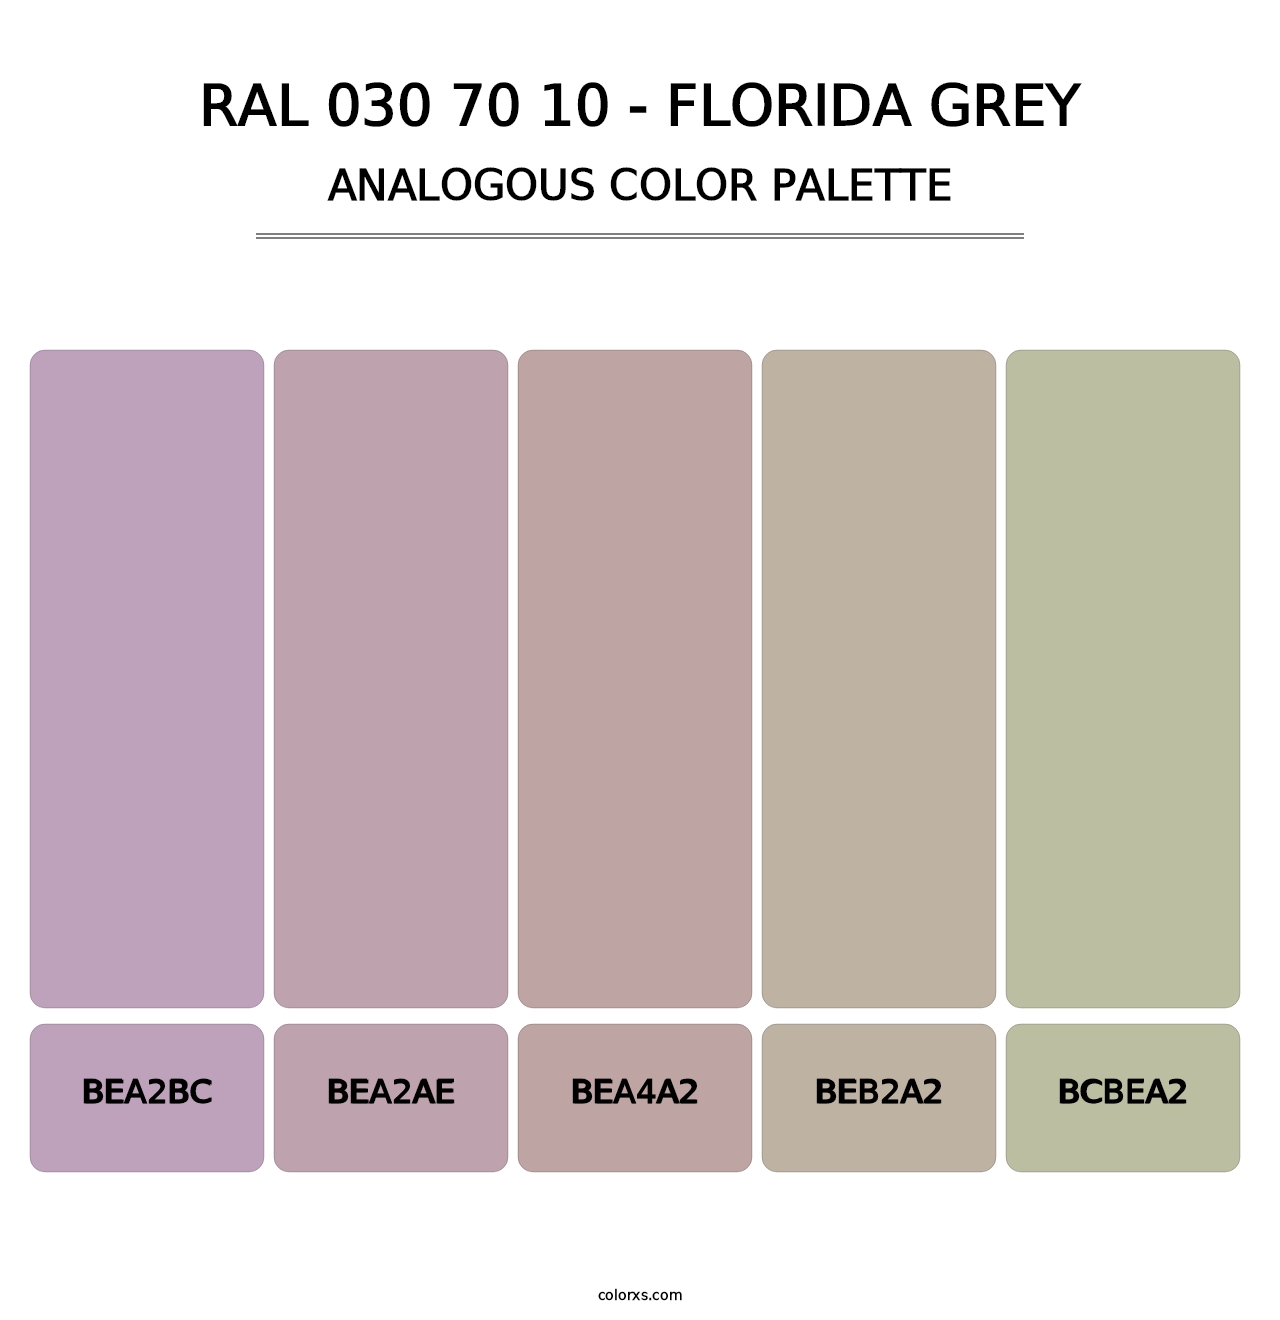 RAL 030 70 10 - Florida Grey - Analogous Color Palette